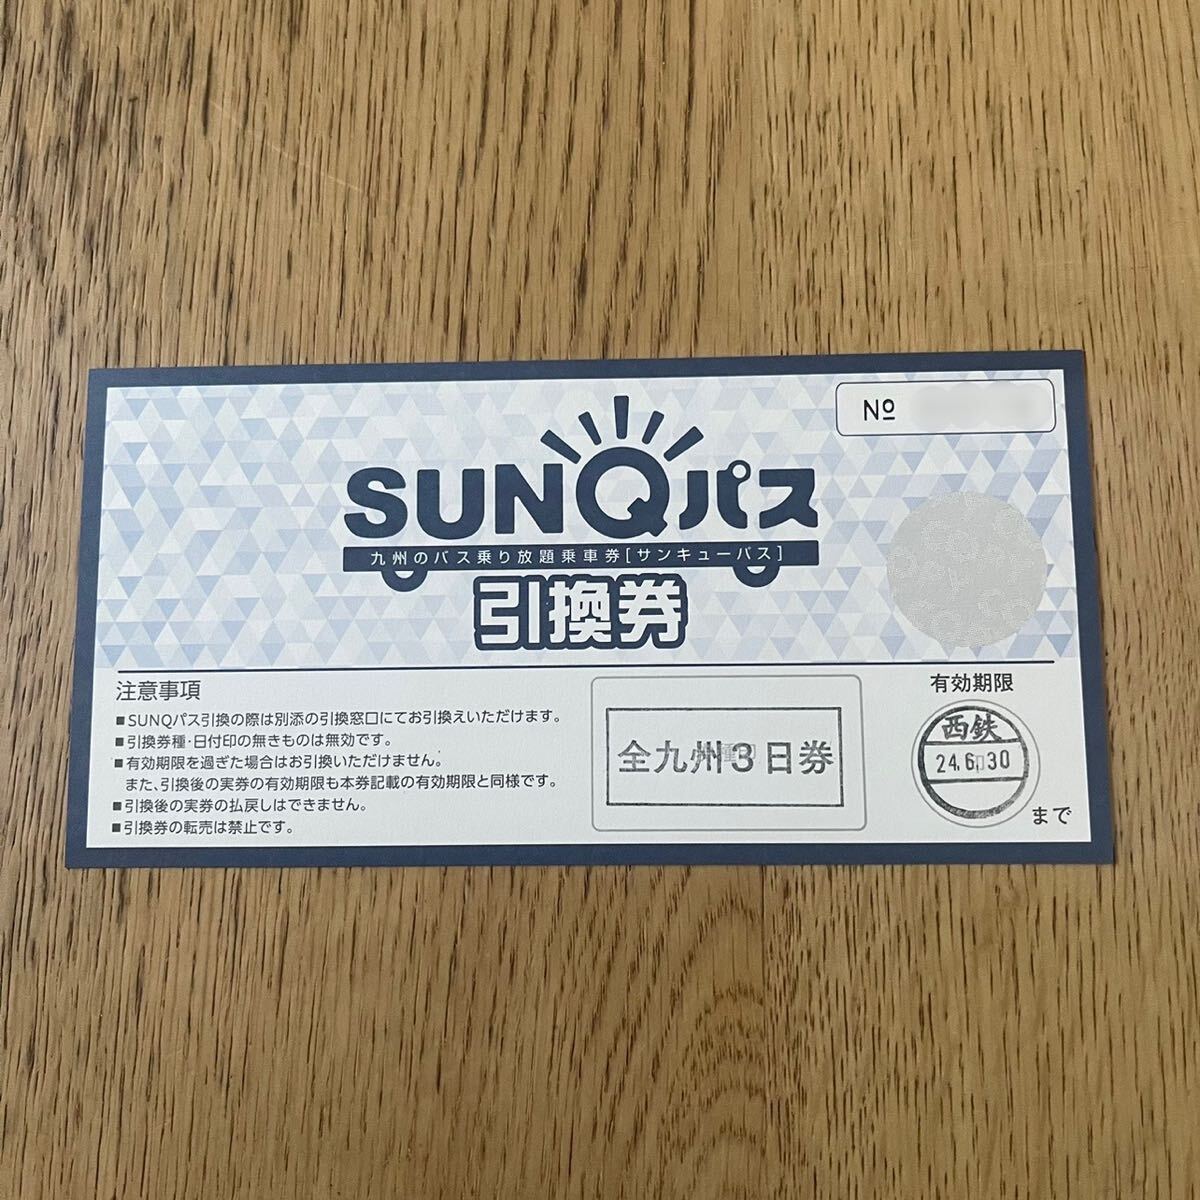 SUNQ Pas all Kyushu 3 day ticket all Kyushu + Shimonoseki 3 days coupon regular price 11000 jpy 